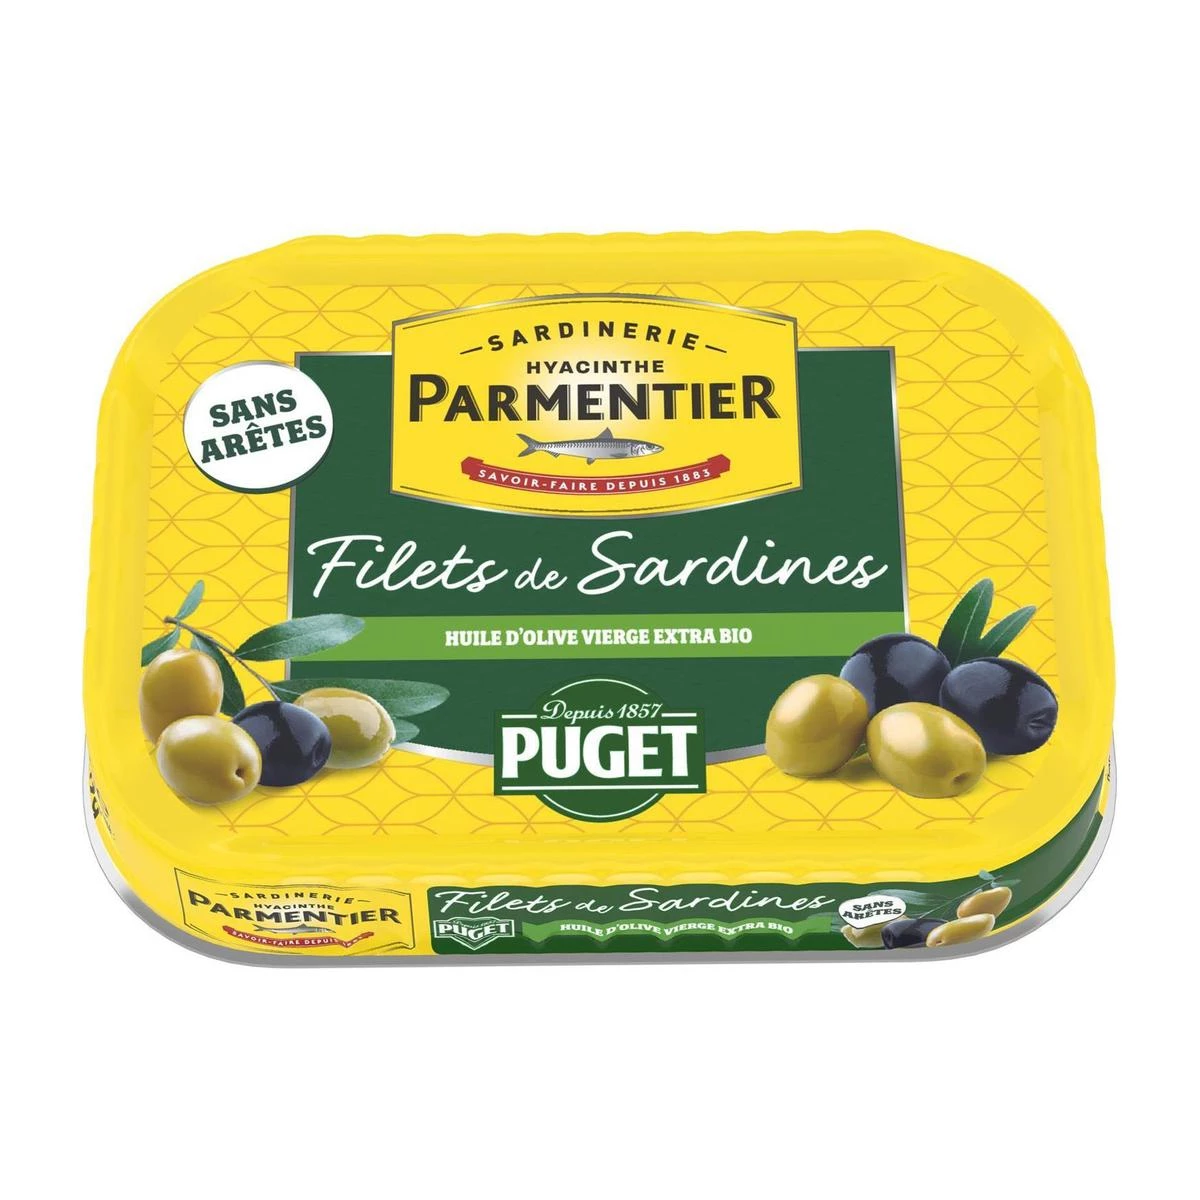 Filets E Sardines Huile D'olive Vierge Extra Bio 70g - Parmentier